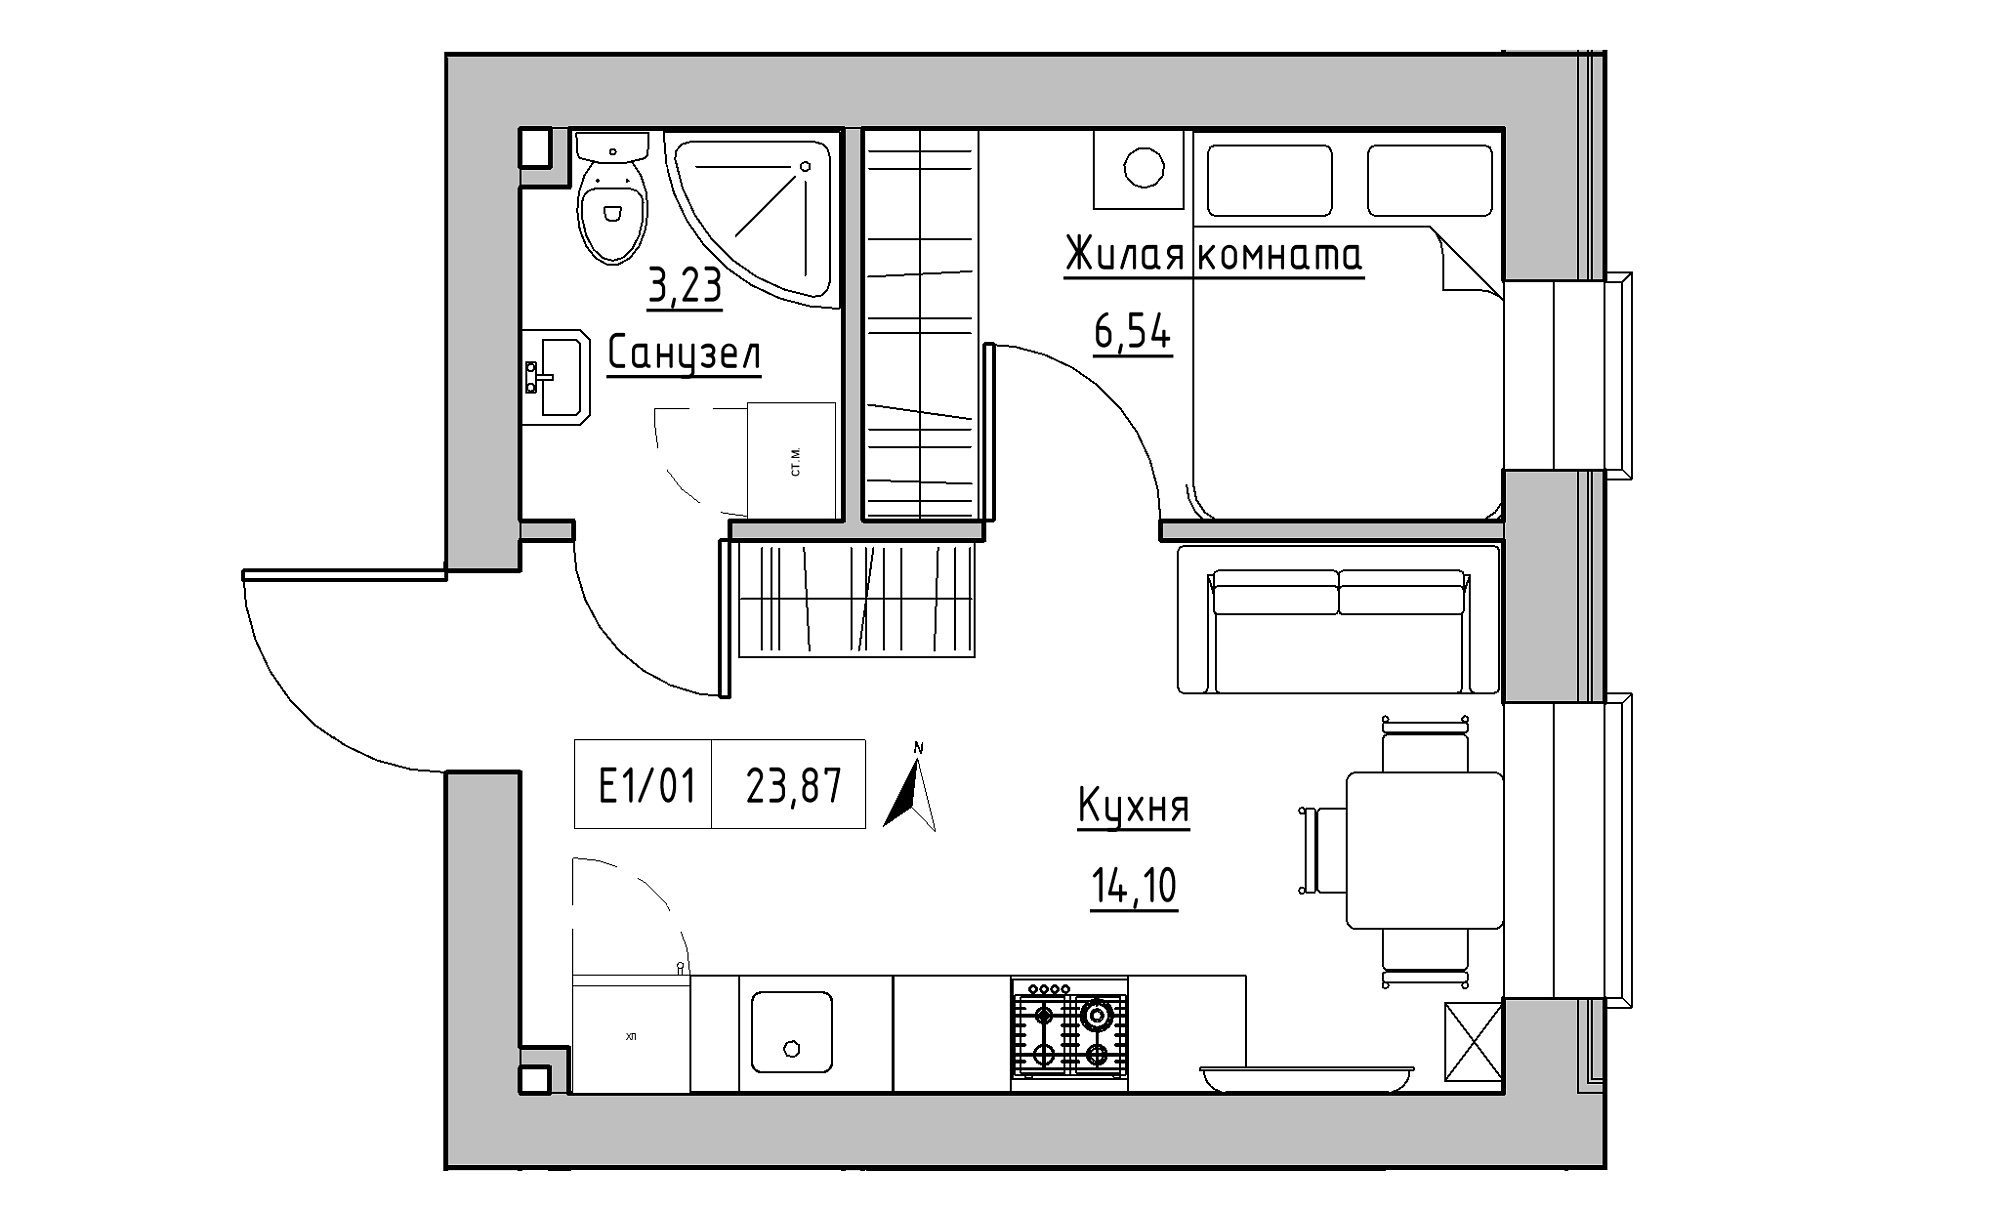 Planning 1-rm flats area 23.87m2, KS-015-03/0004.